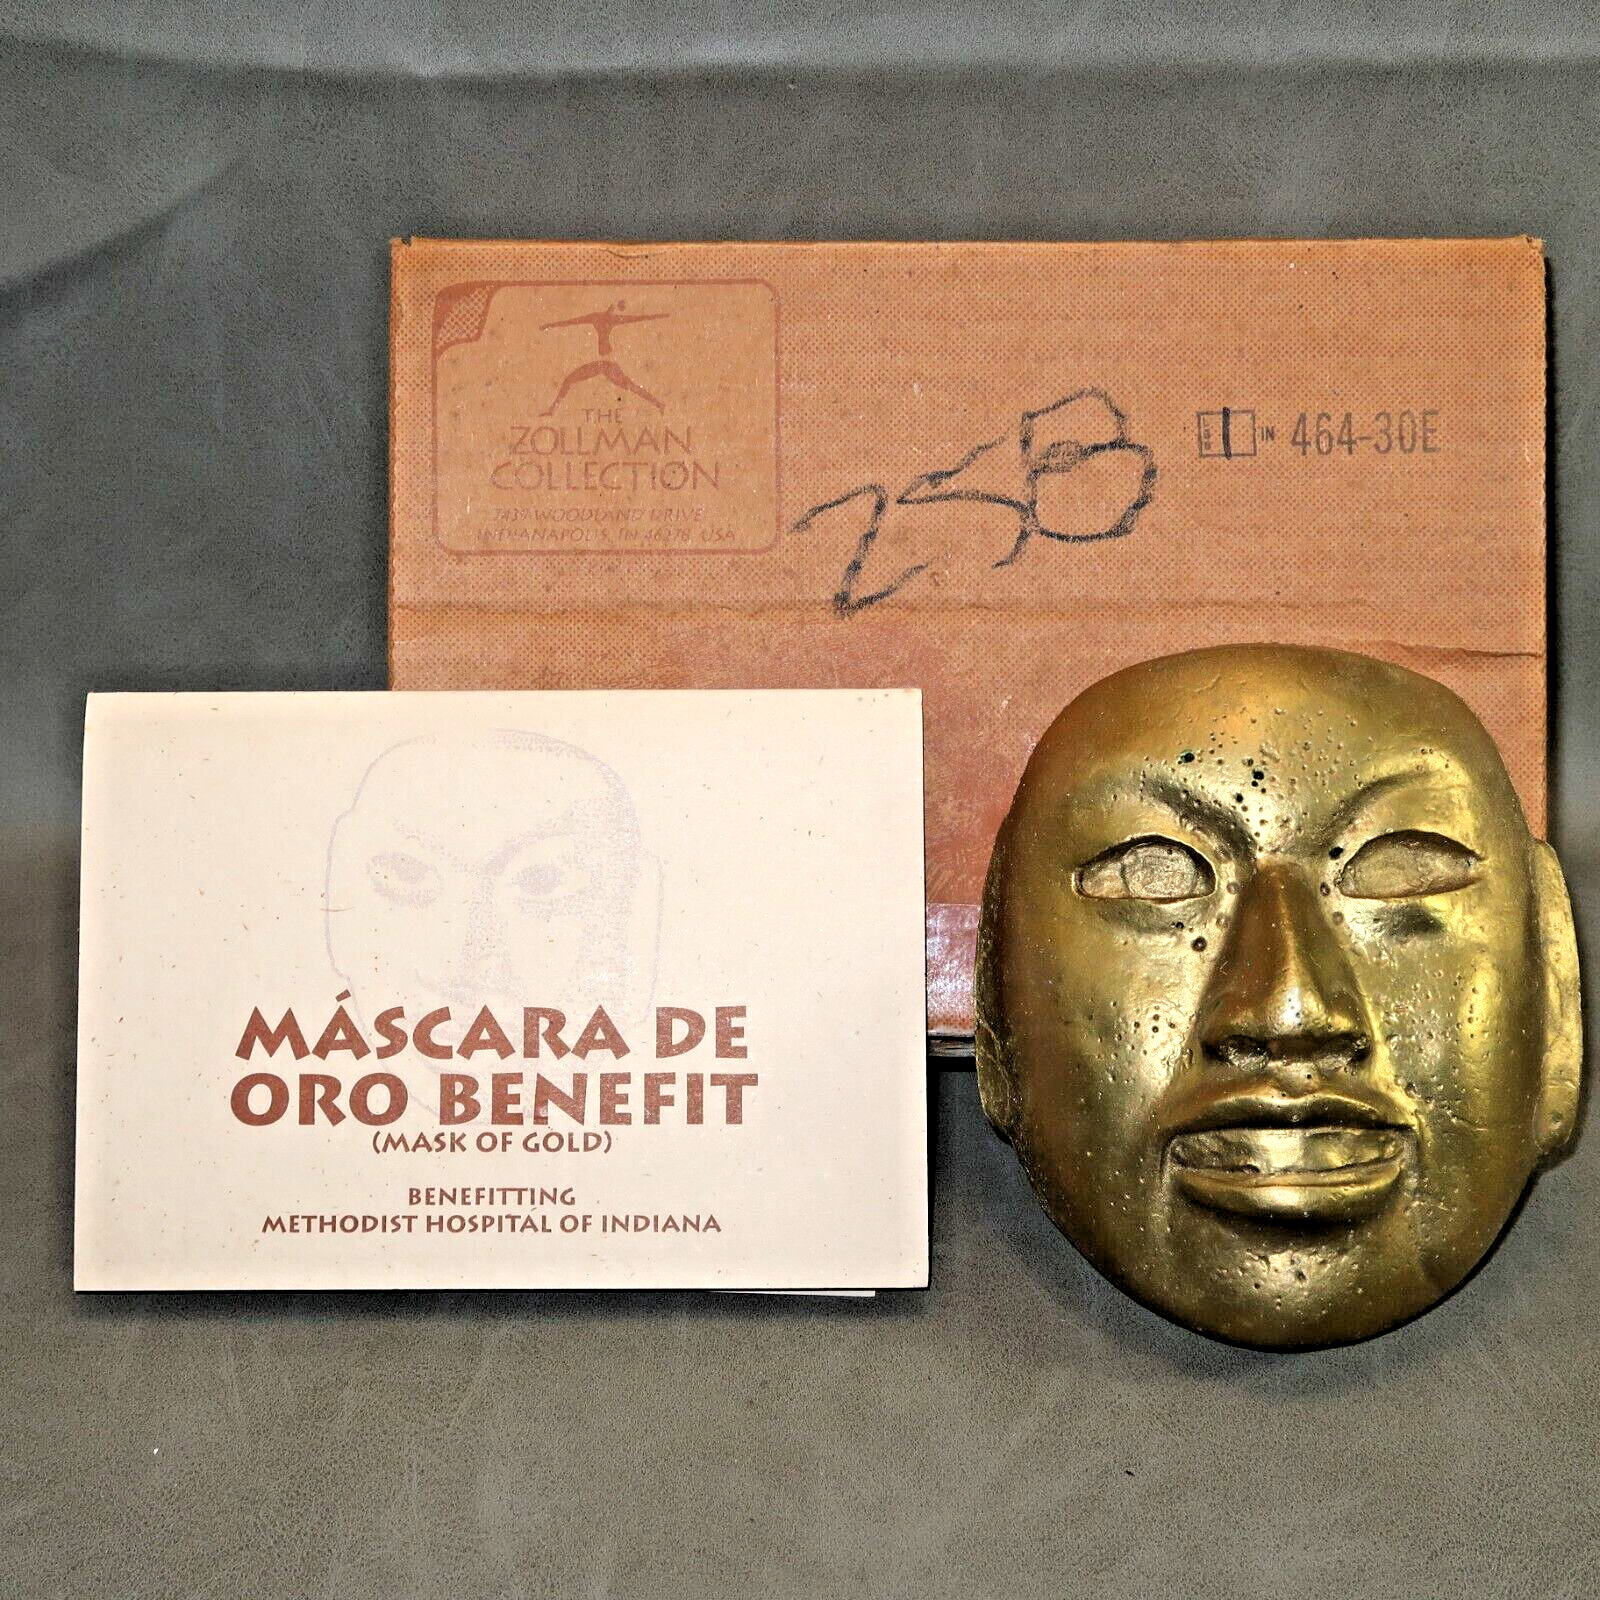 1994 Face Mask of Gold Mascara de Oro from the Zollman Collection Reproduction